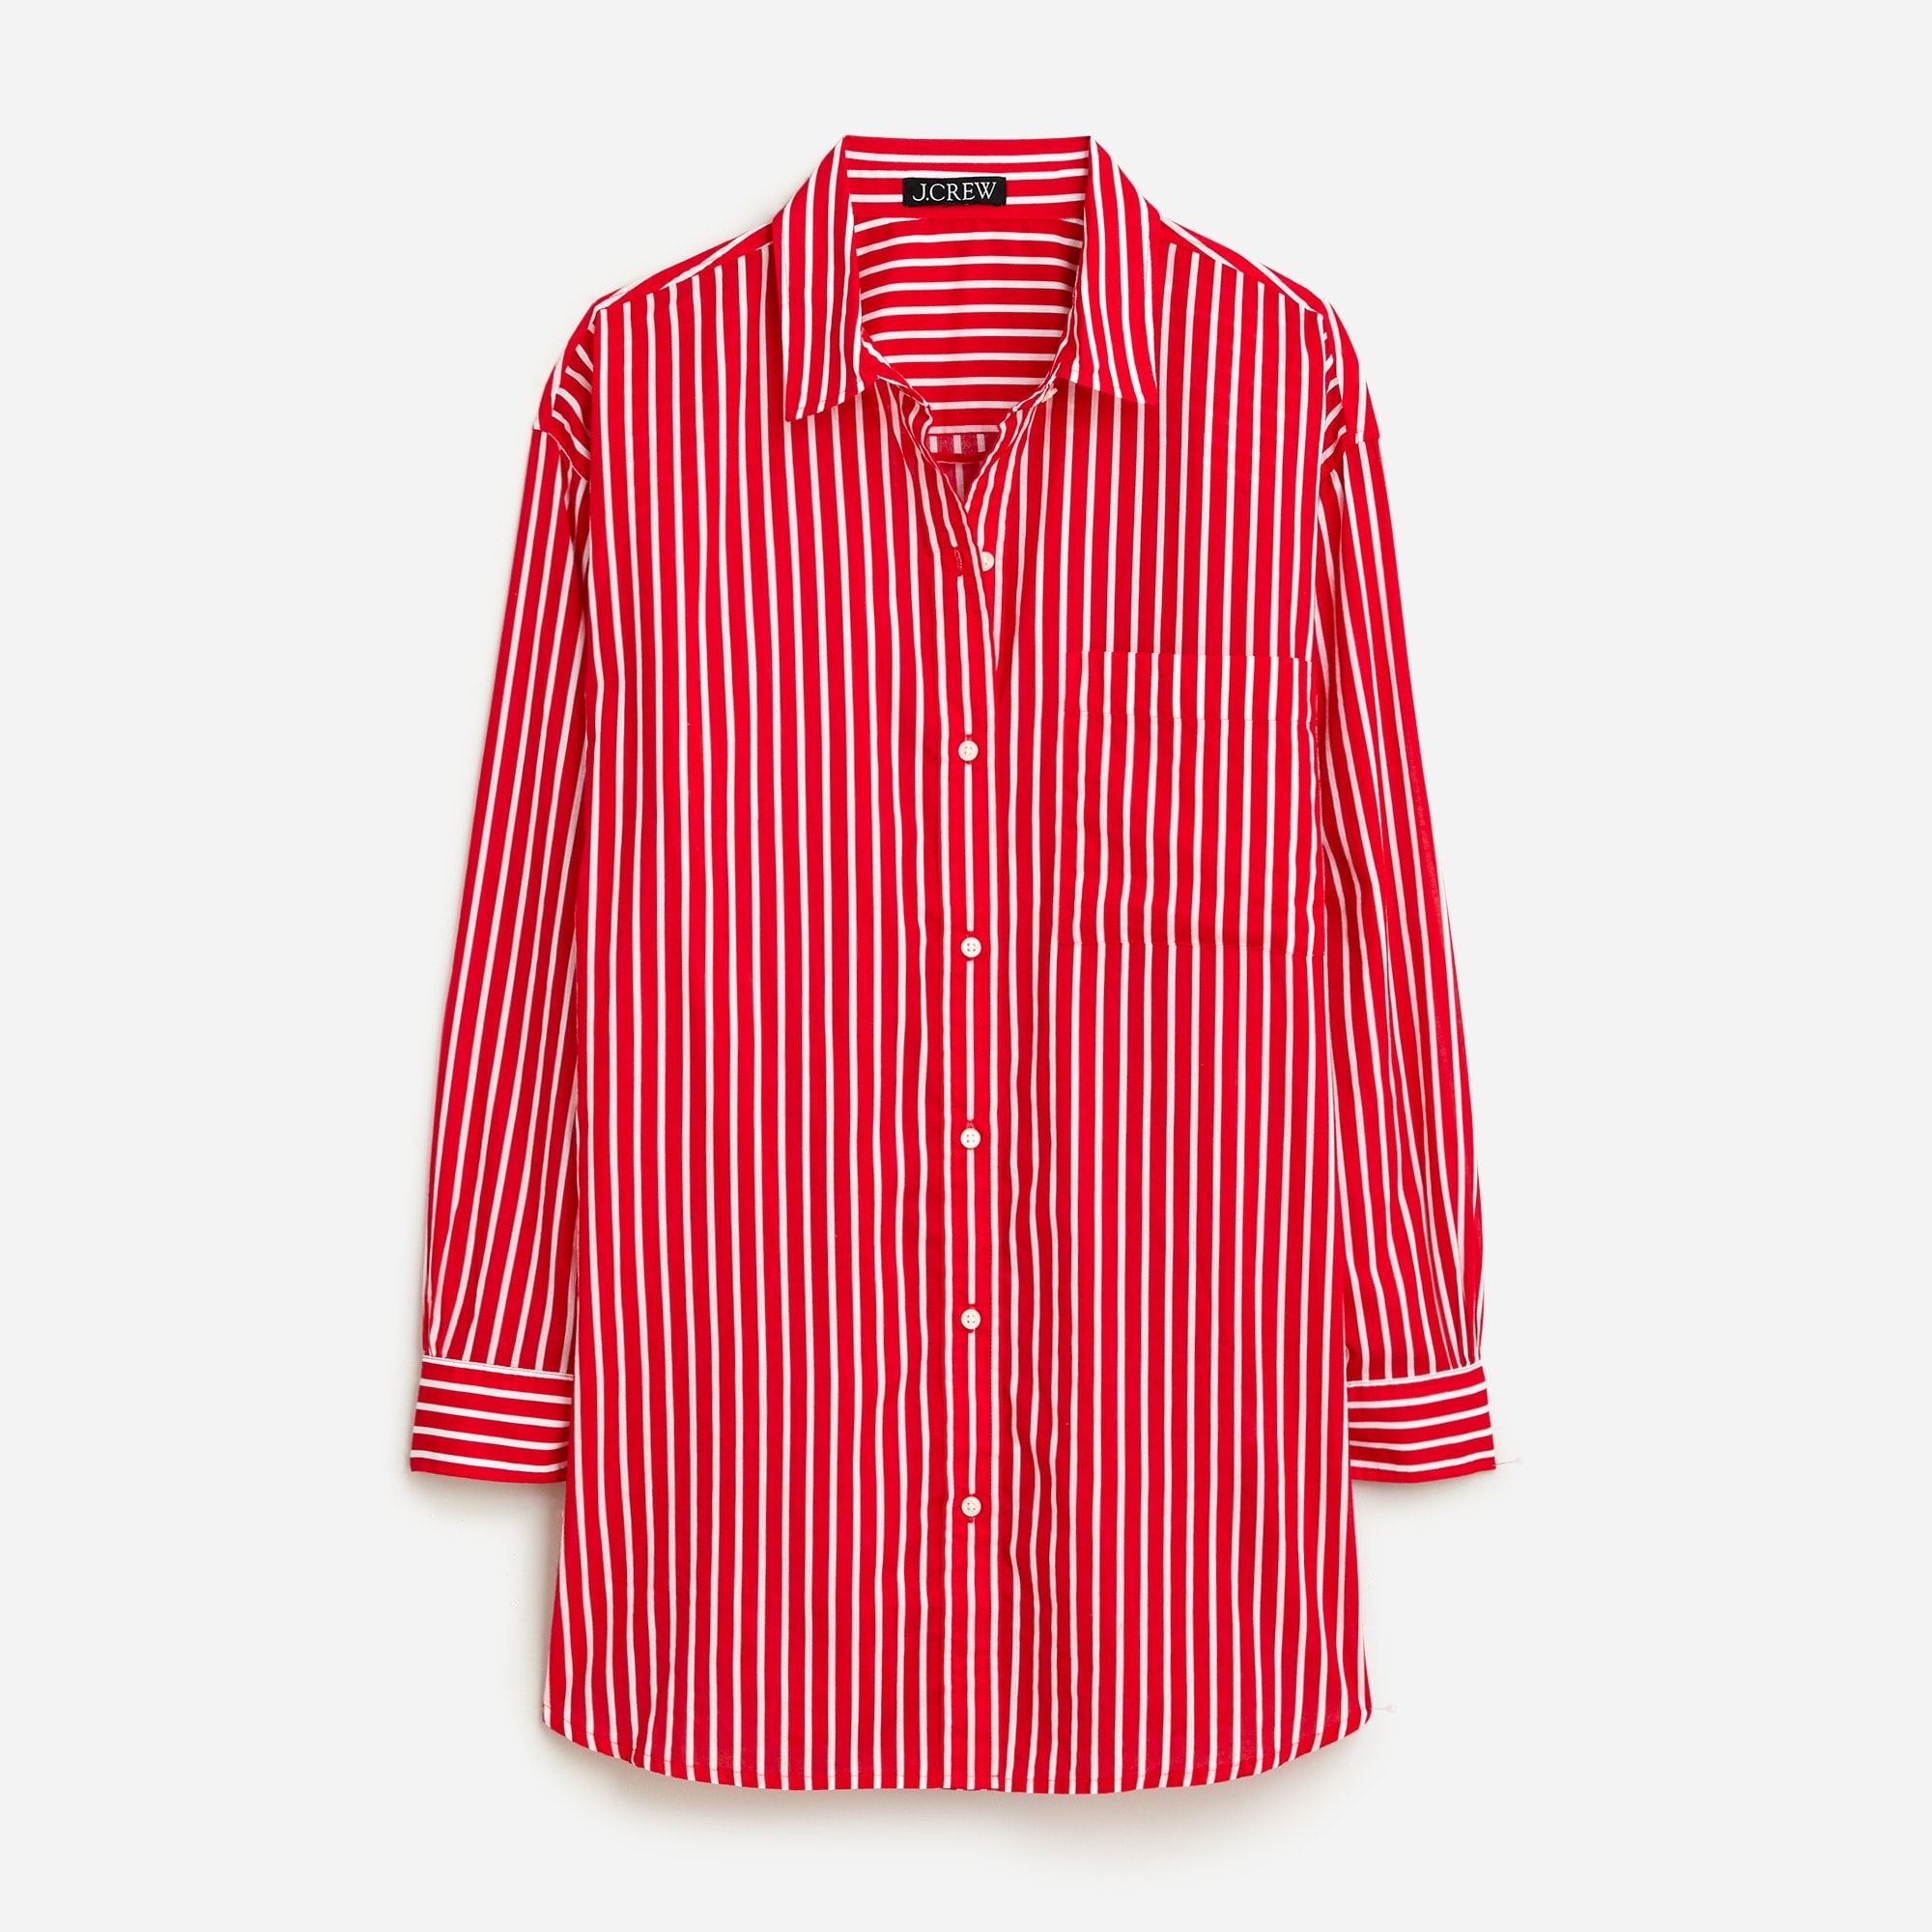  Cotton voile beach shirt in stripe